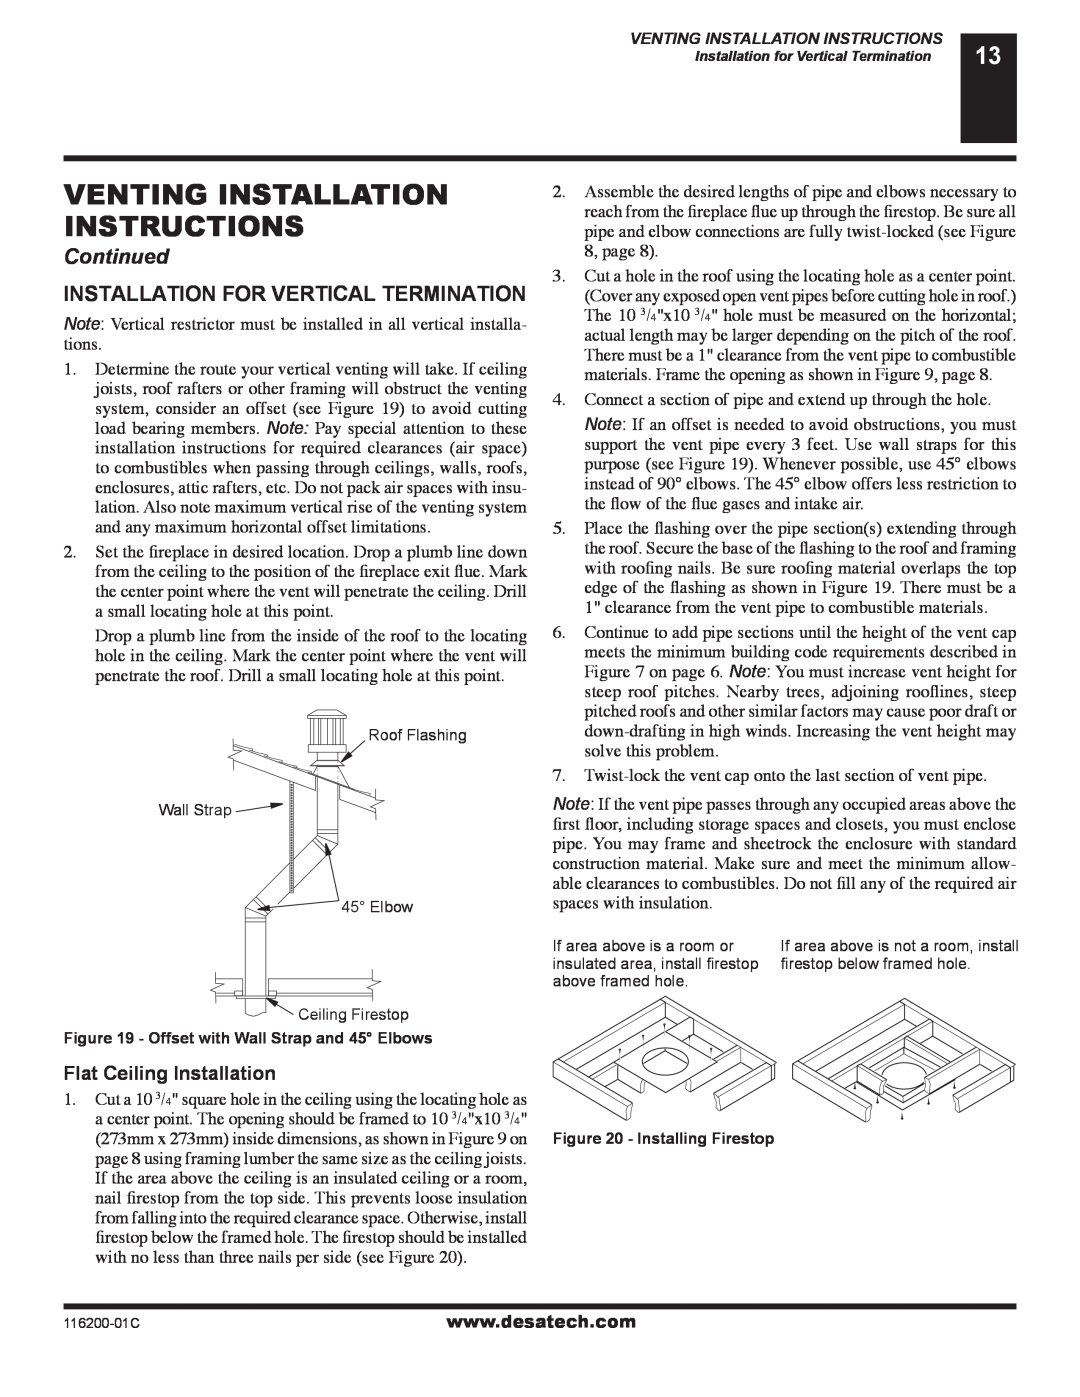 Desa (V)VC36P Installation For Vertical Termination, Flat Ceiling Installation, Venting Installation Instructions 